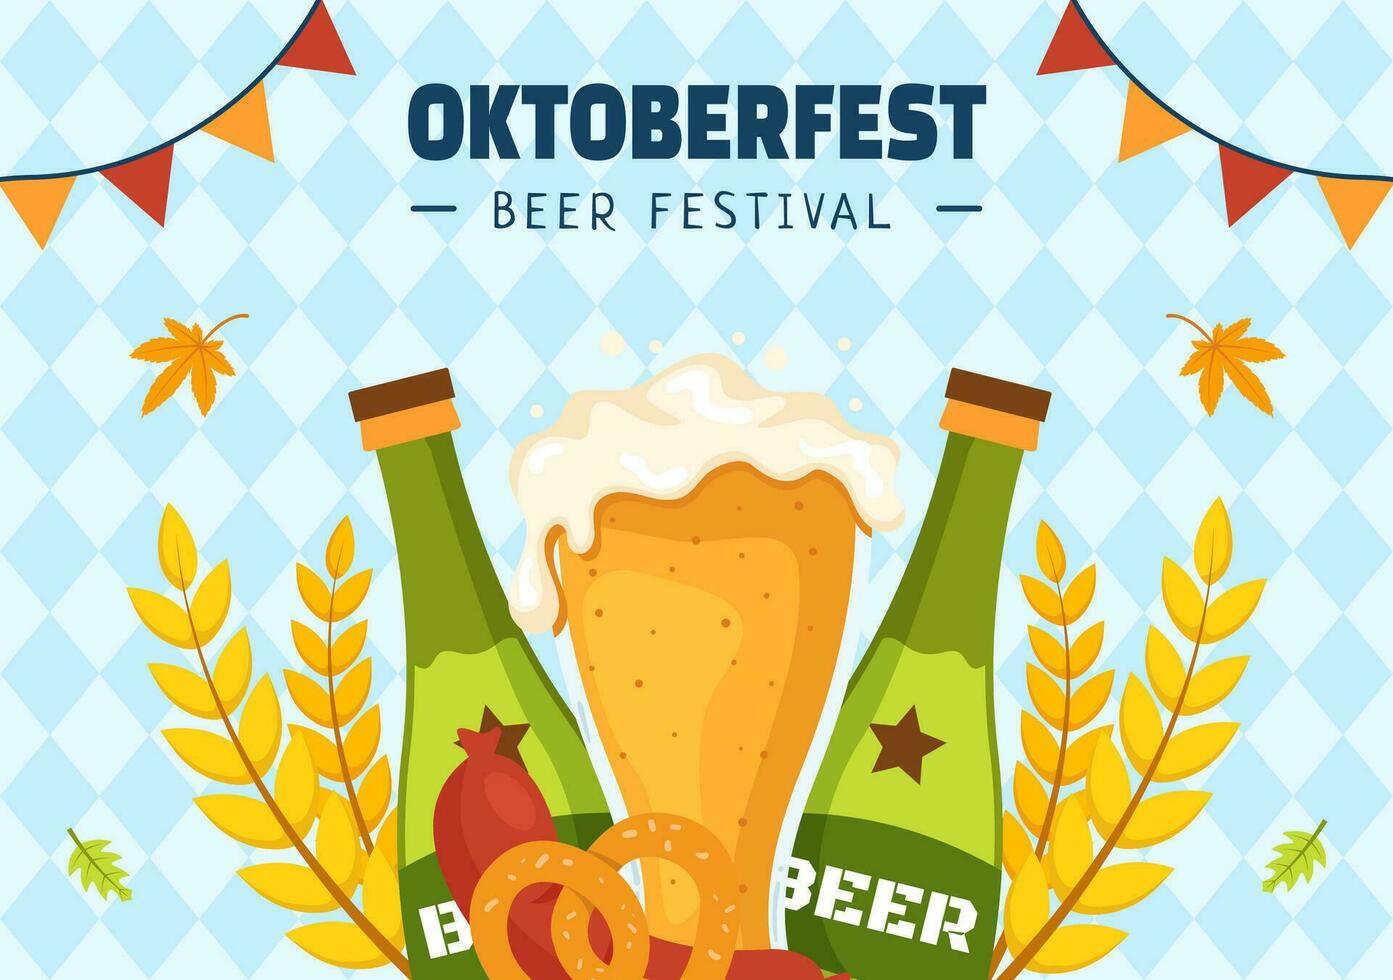 Oktoberfest cerveza festival social medios de comunicación antecedentes plano dibujos animados mano dibujado plantillas ilustración vector